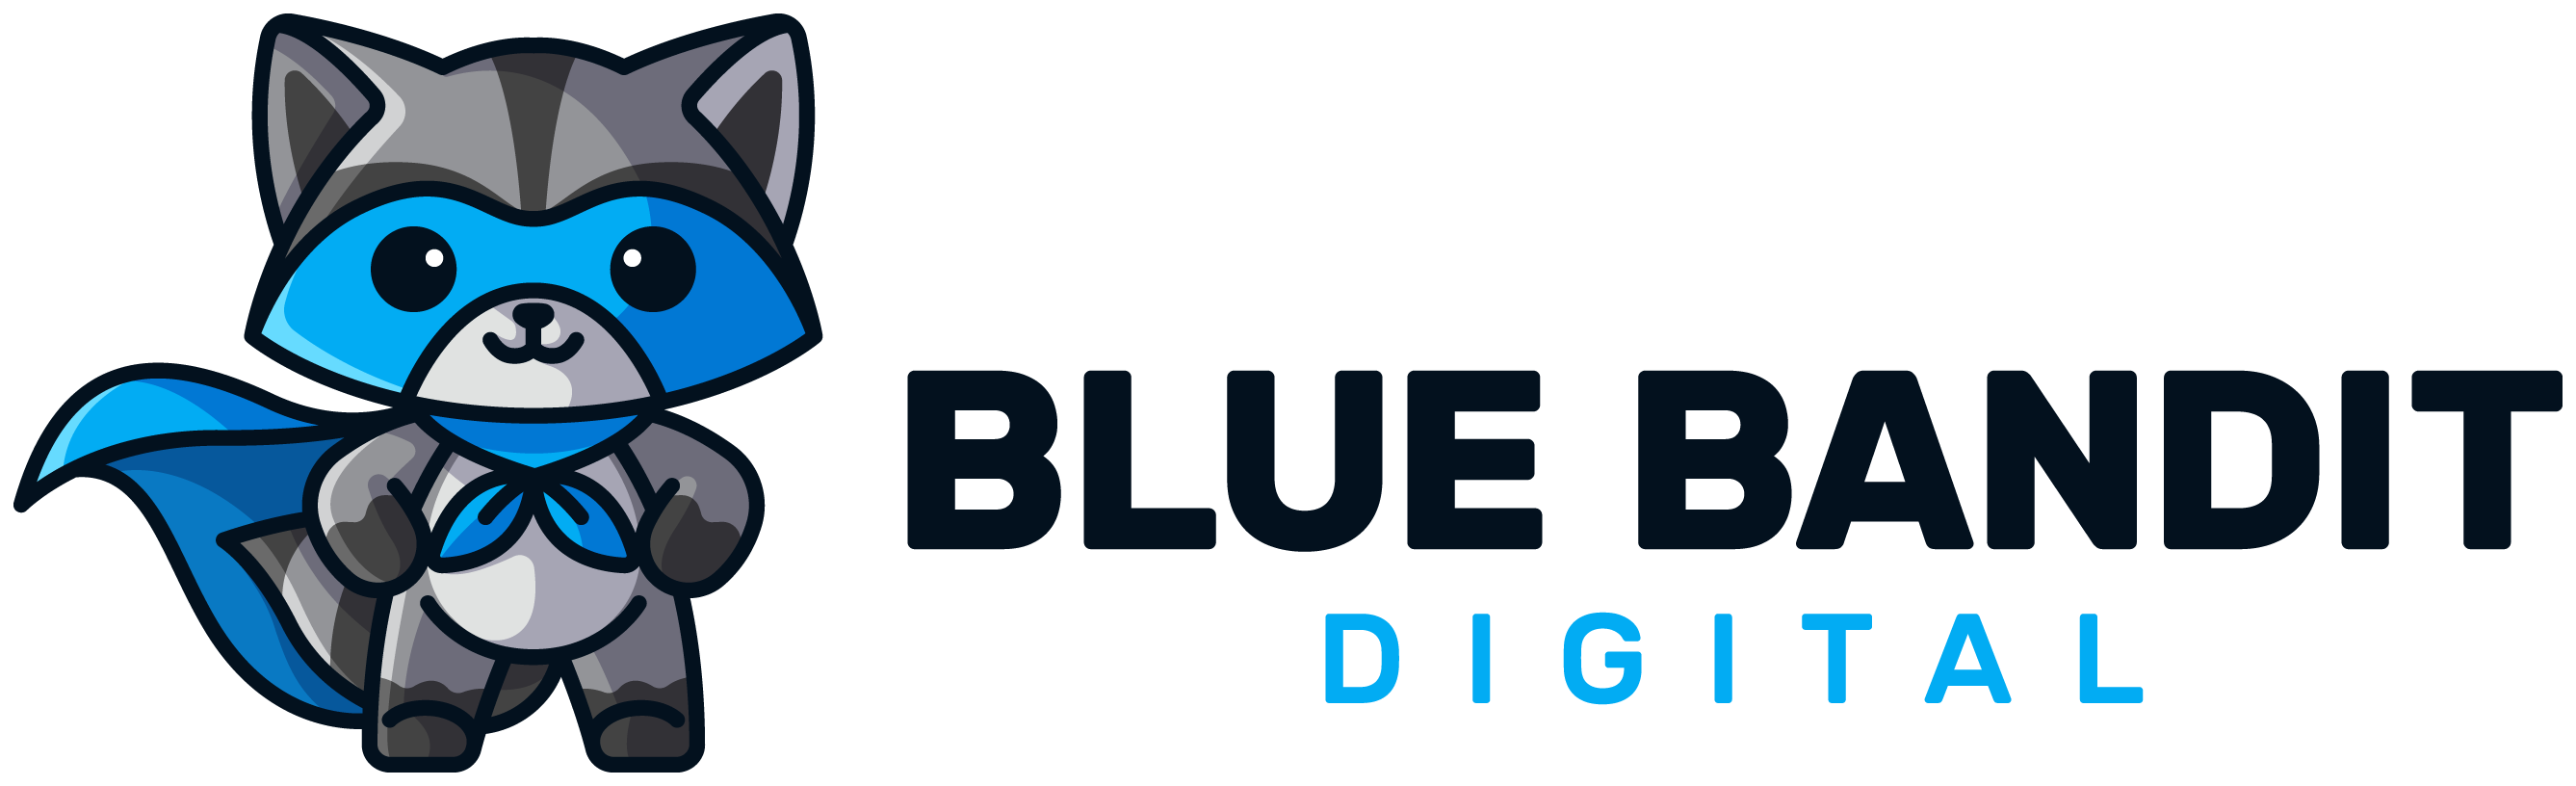 3-Blue-Bandit-Digital_Horizontal_White-BG.png